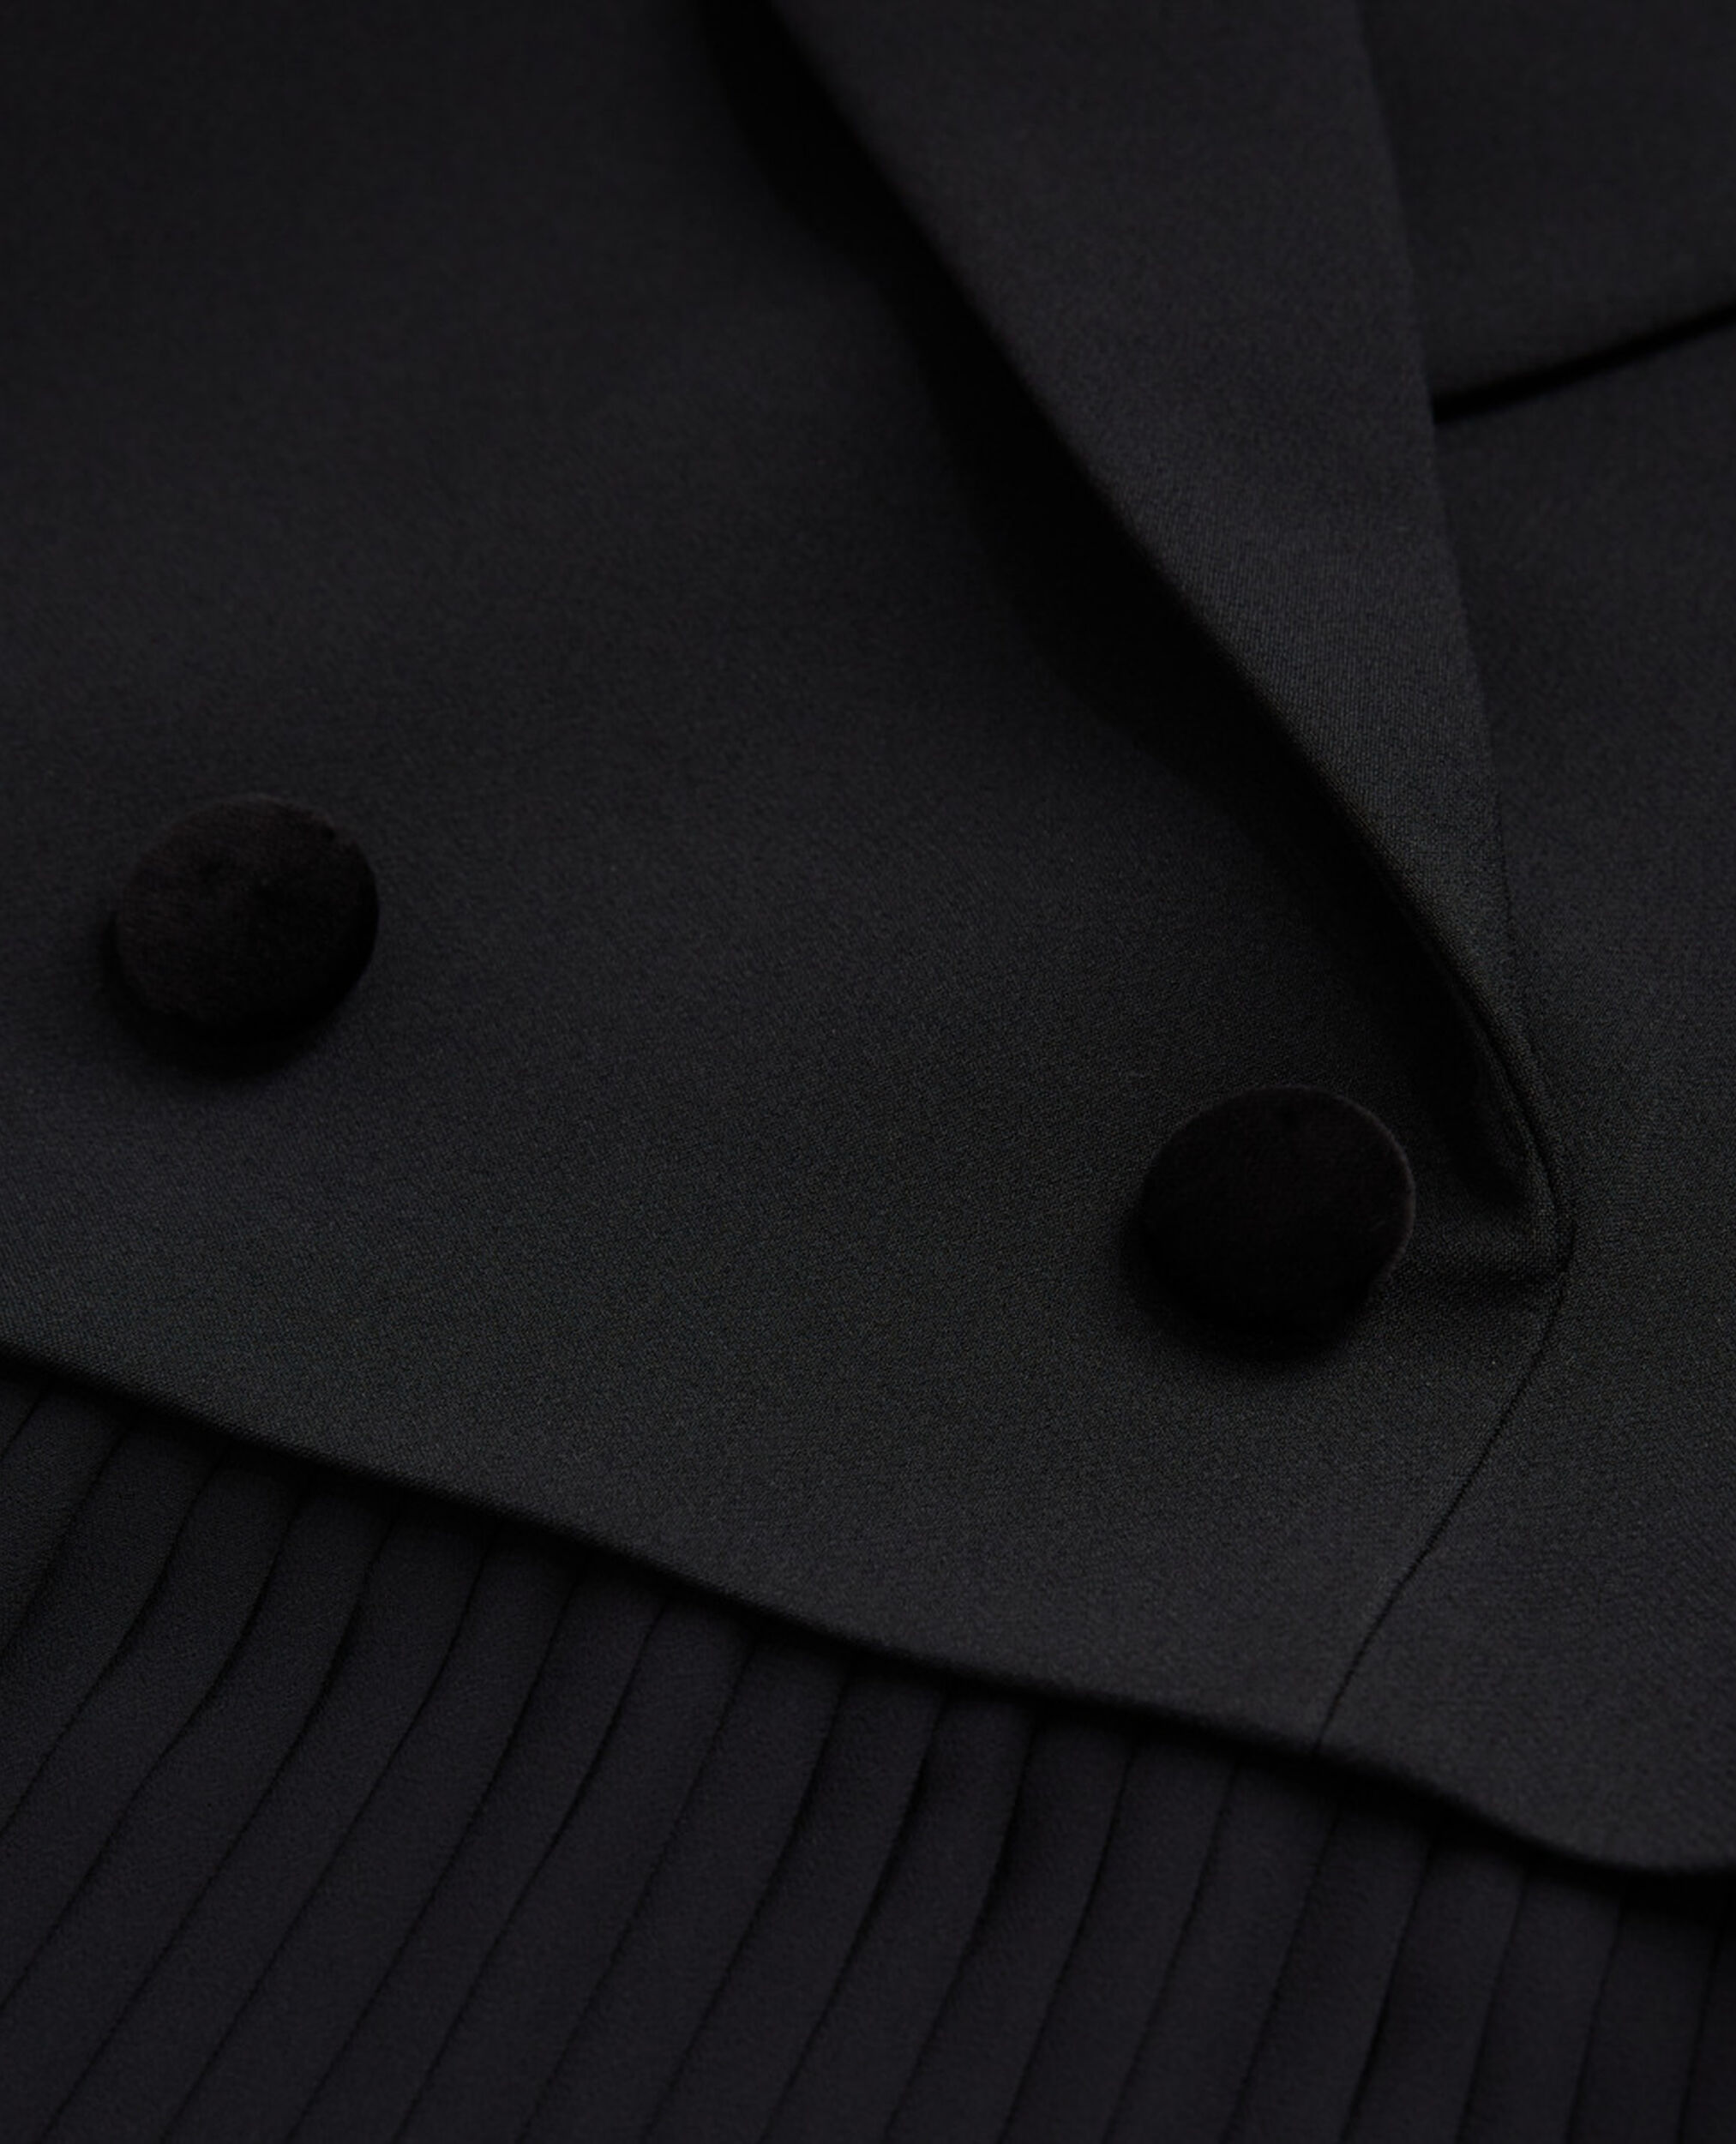 Robe courte en laine noire, BLACK, hi-res image number null